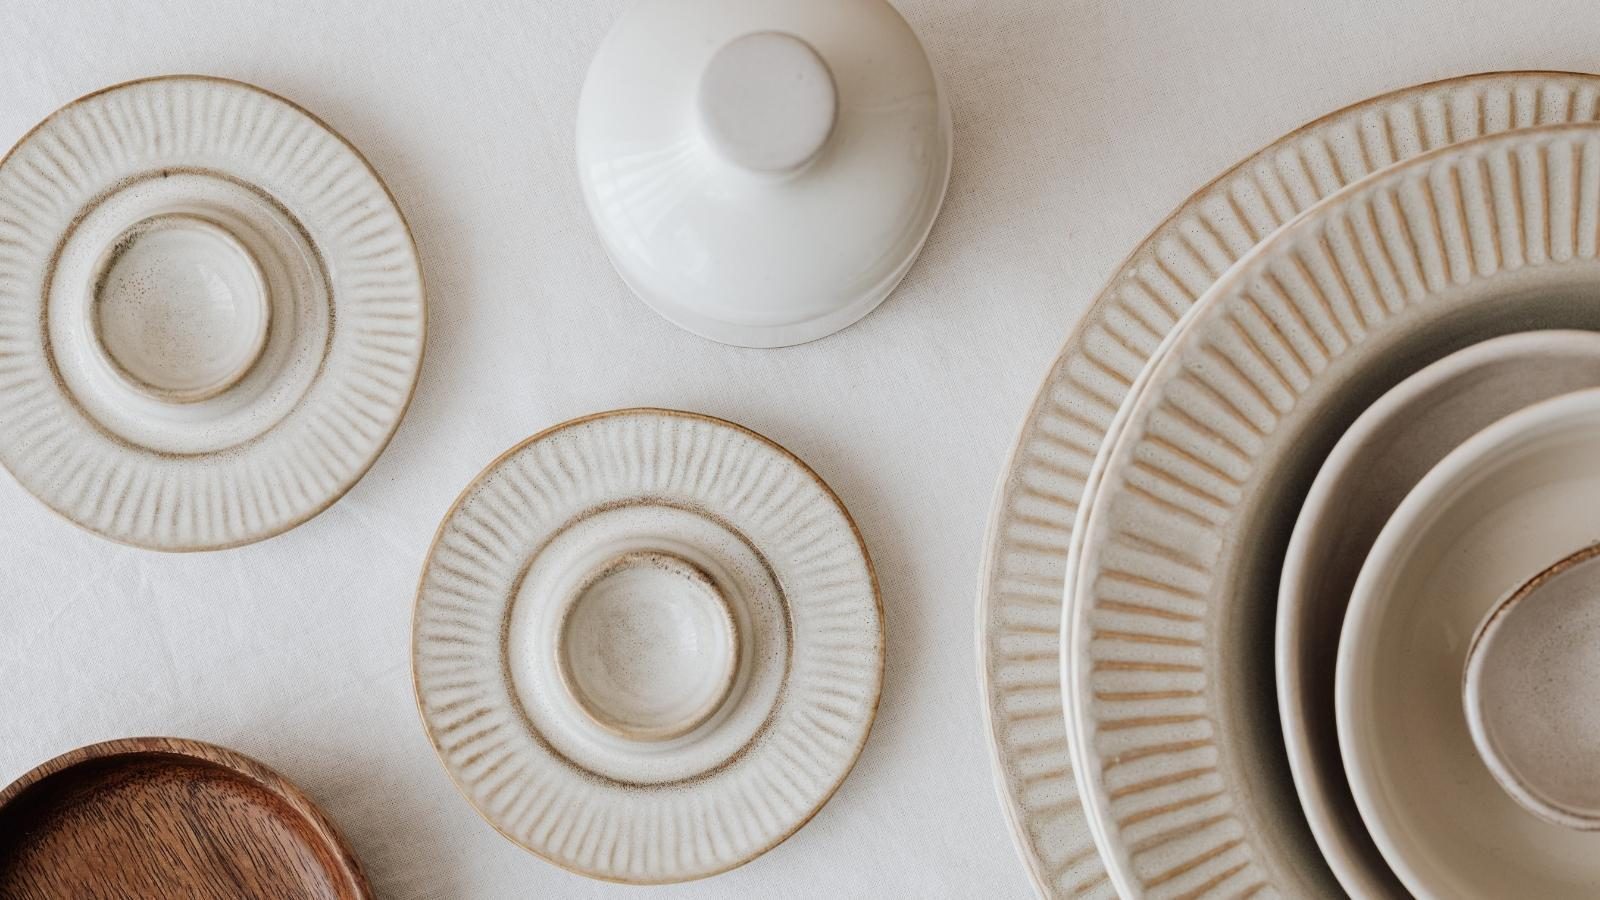 I piatti di ceramica - Capire i propri sogni - Kaya